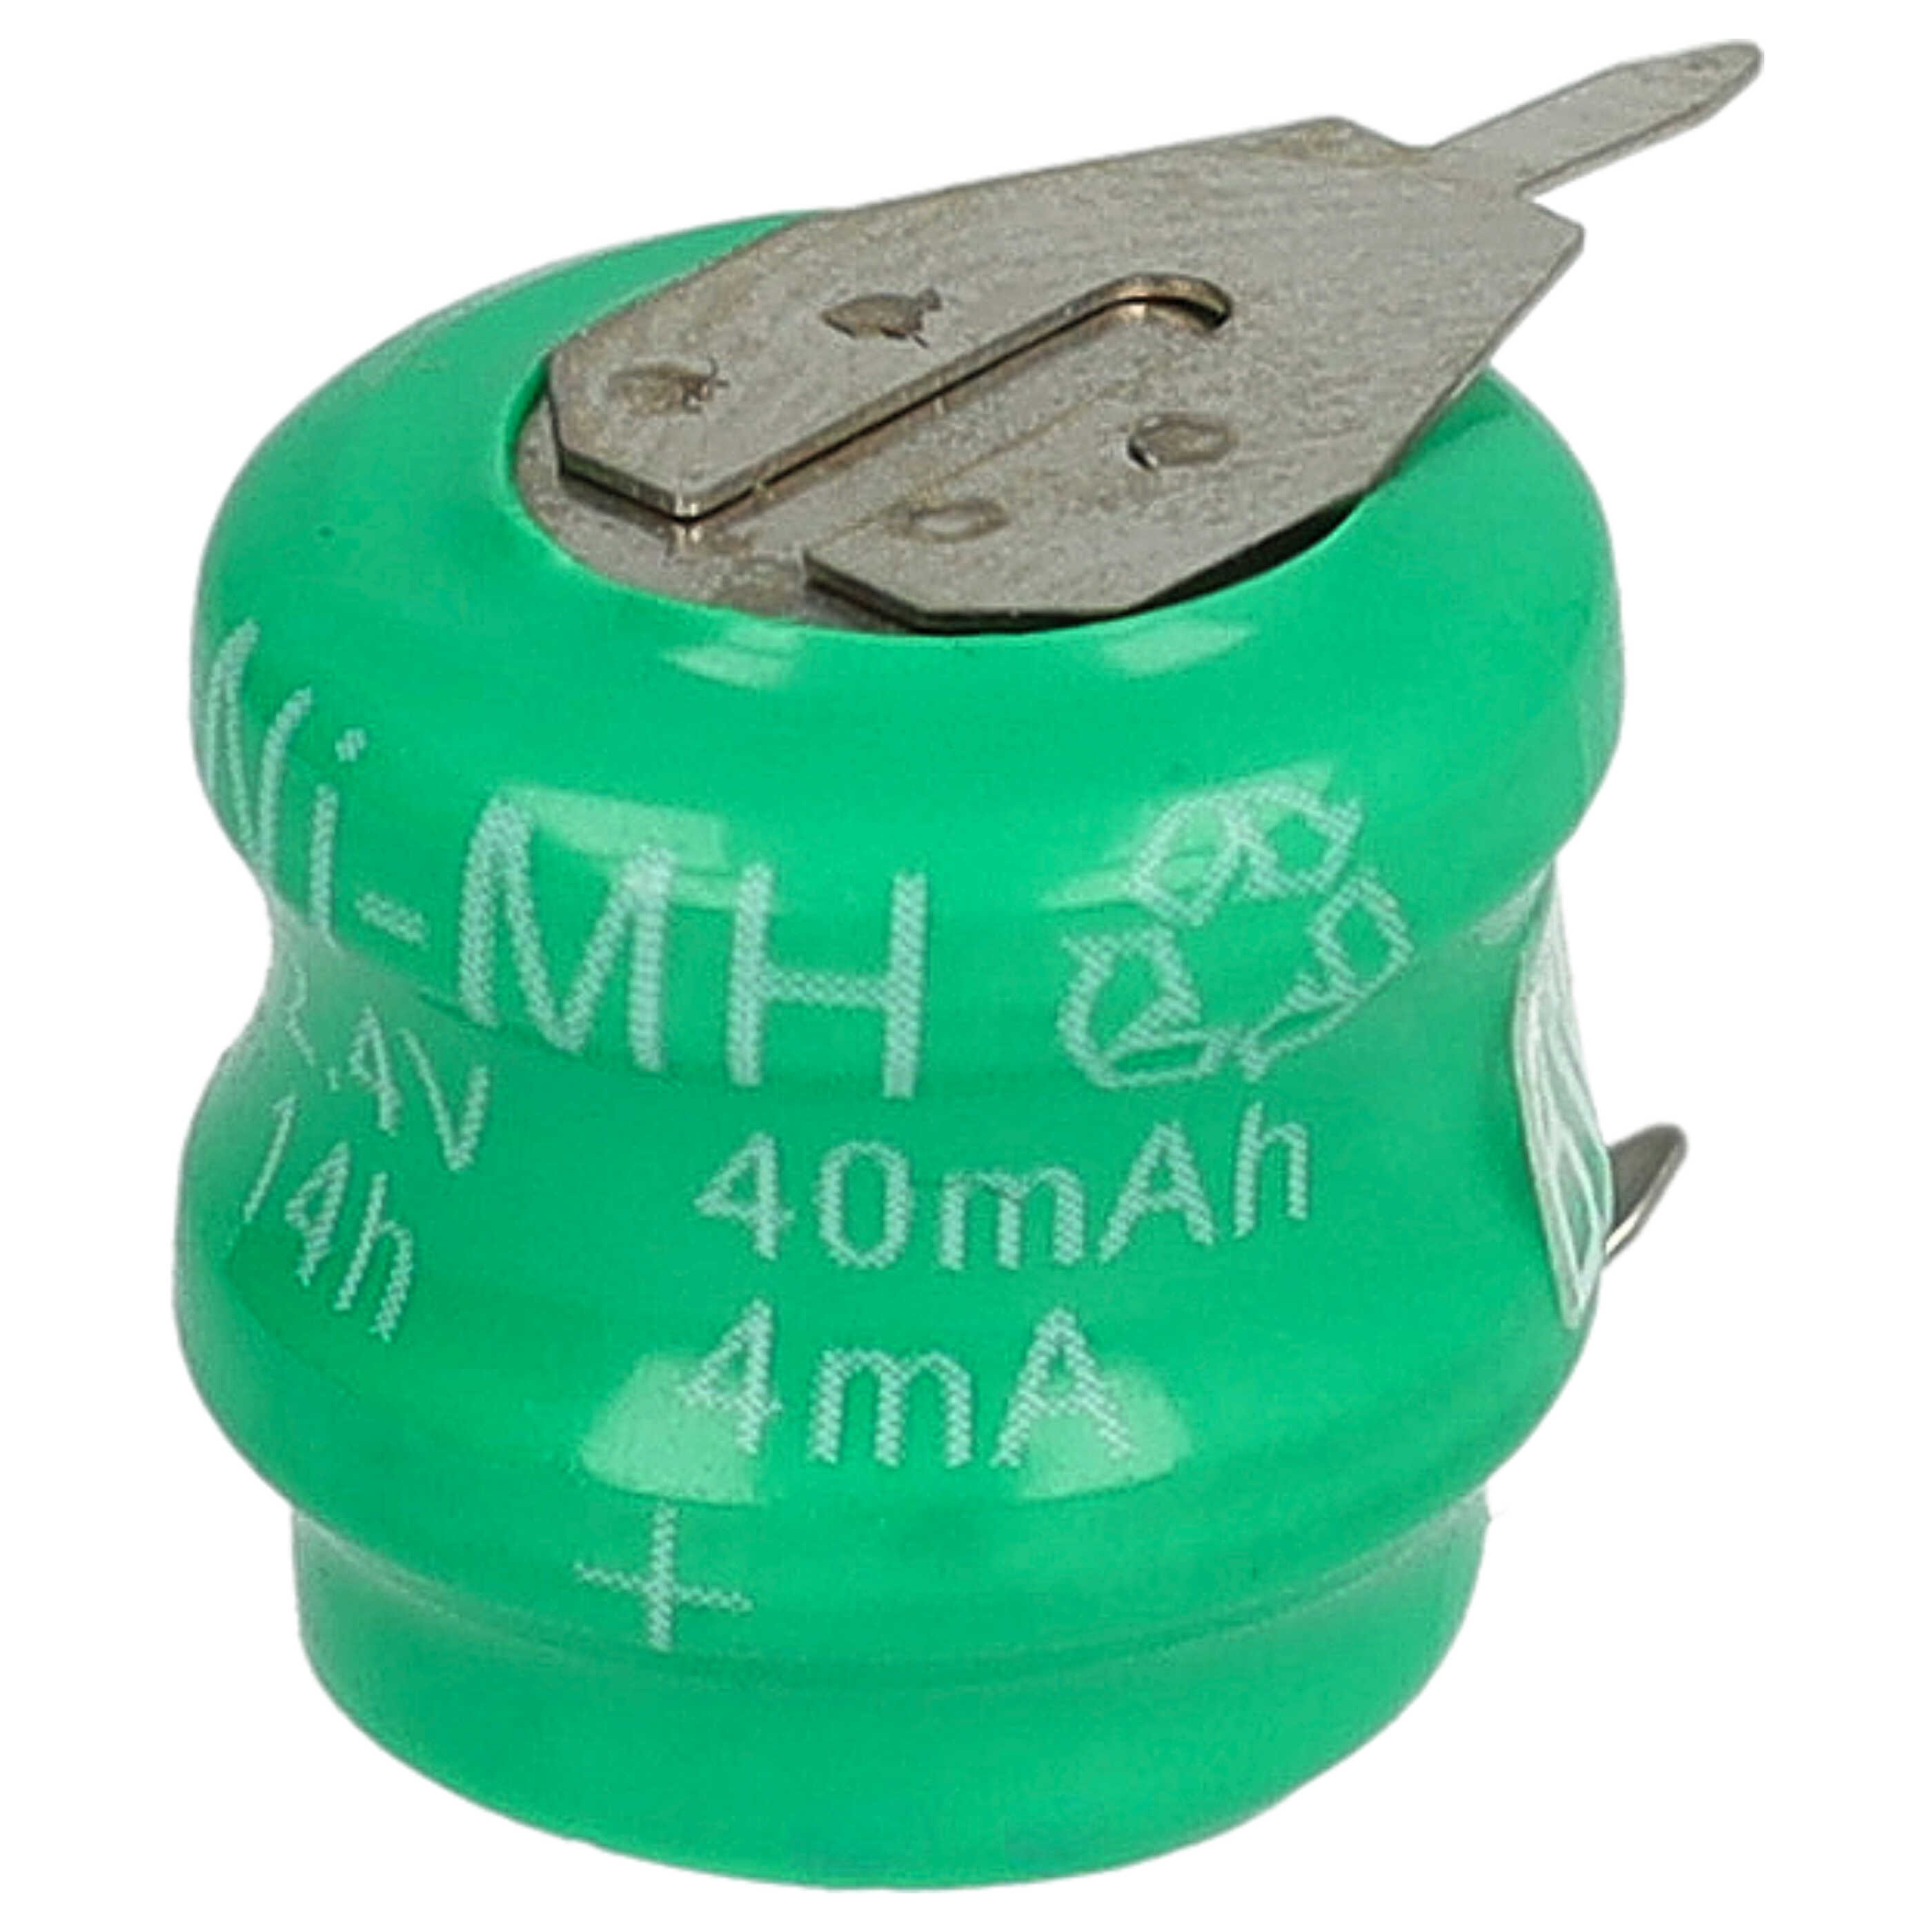 Knopfzellen-Akku (2x Zelle) Typ V40H 2 Pins für Modellbau-Akkus Solar-Leuchten uvm. - 40mAh 2,4V NiMH